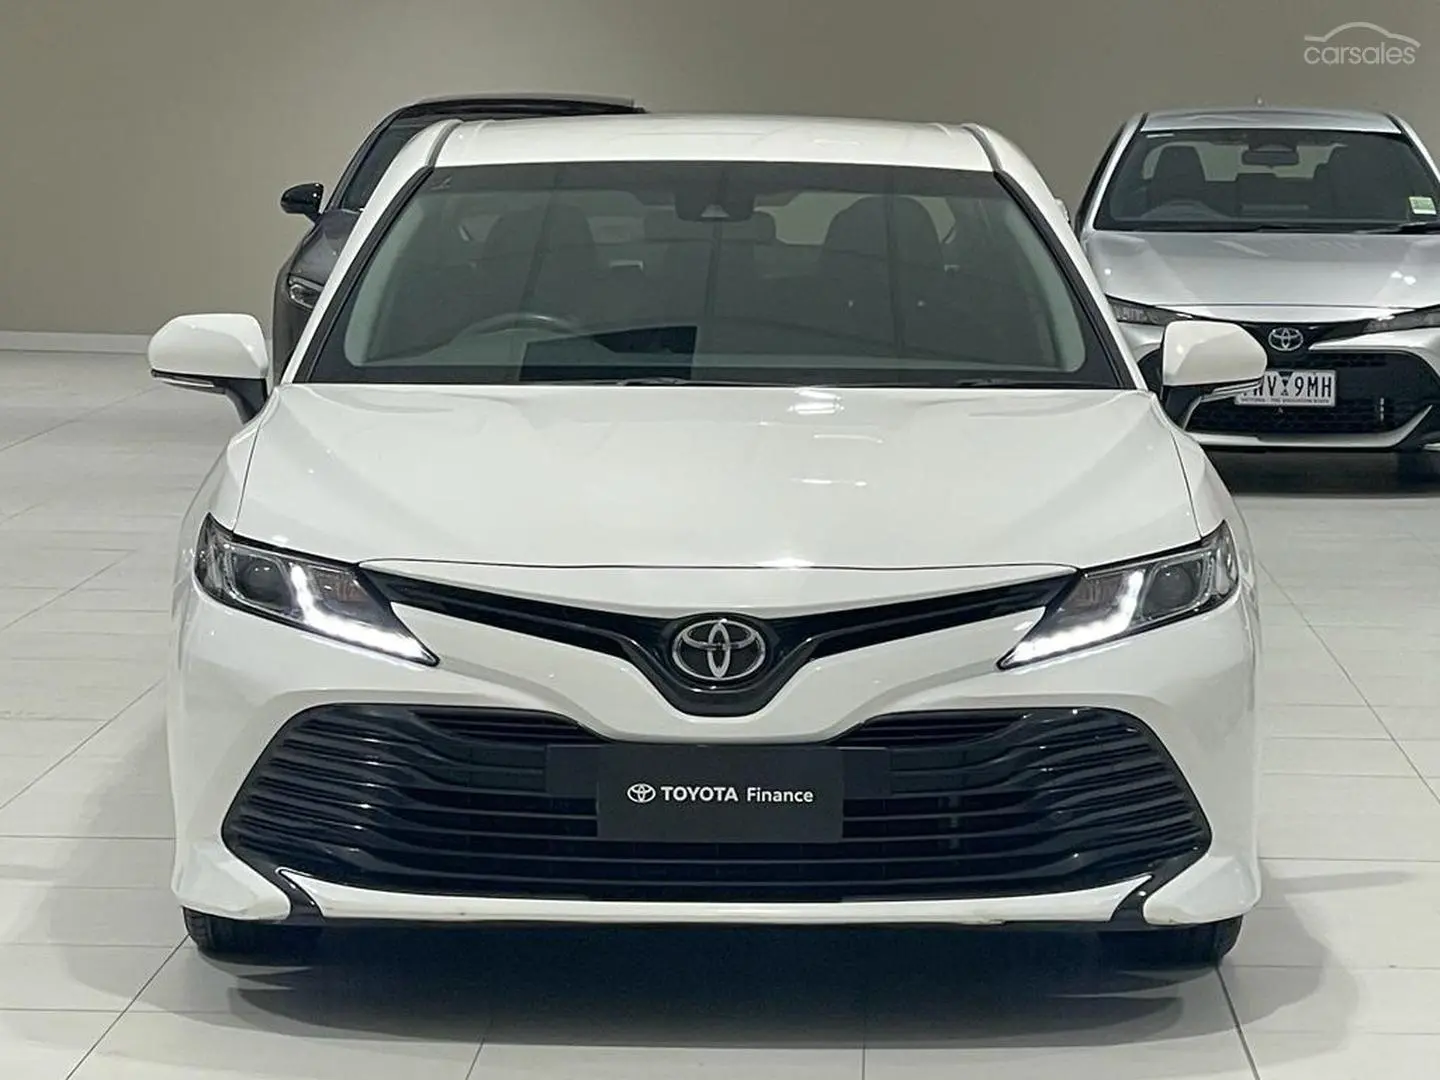 2018 Toyota Camry Image 4